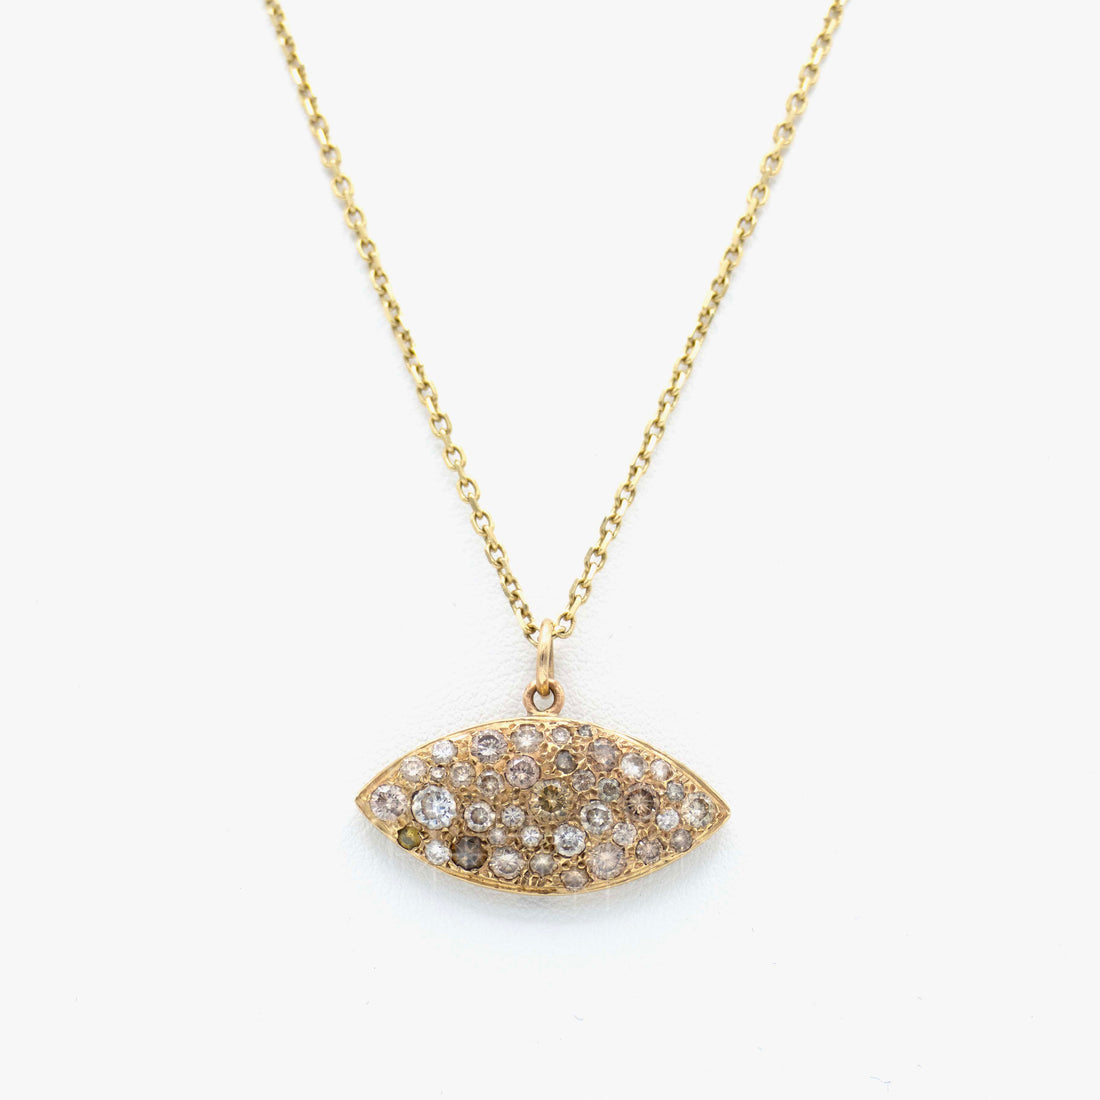 Irit Design 14K Gold and Diamond Eye Pendant Necklace